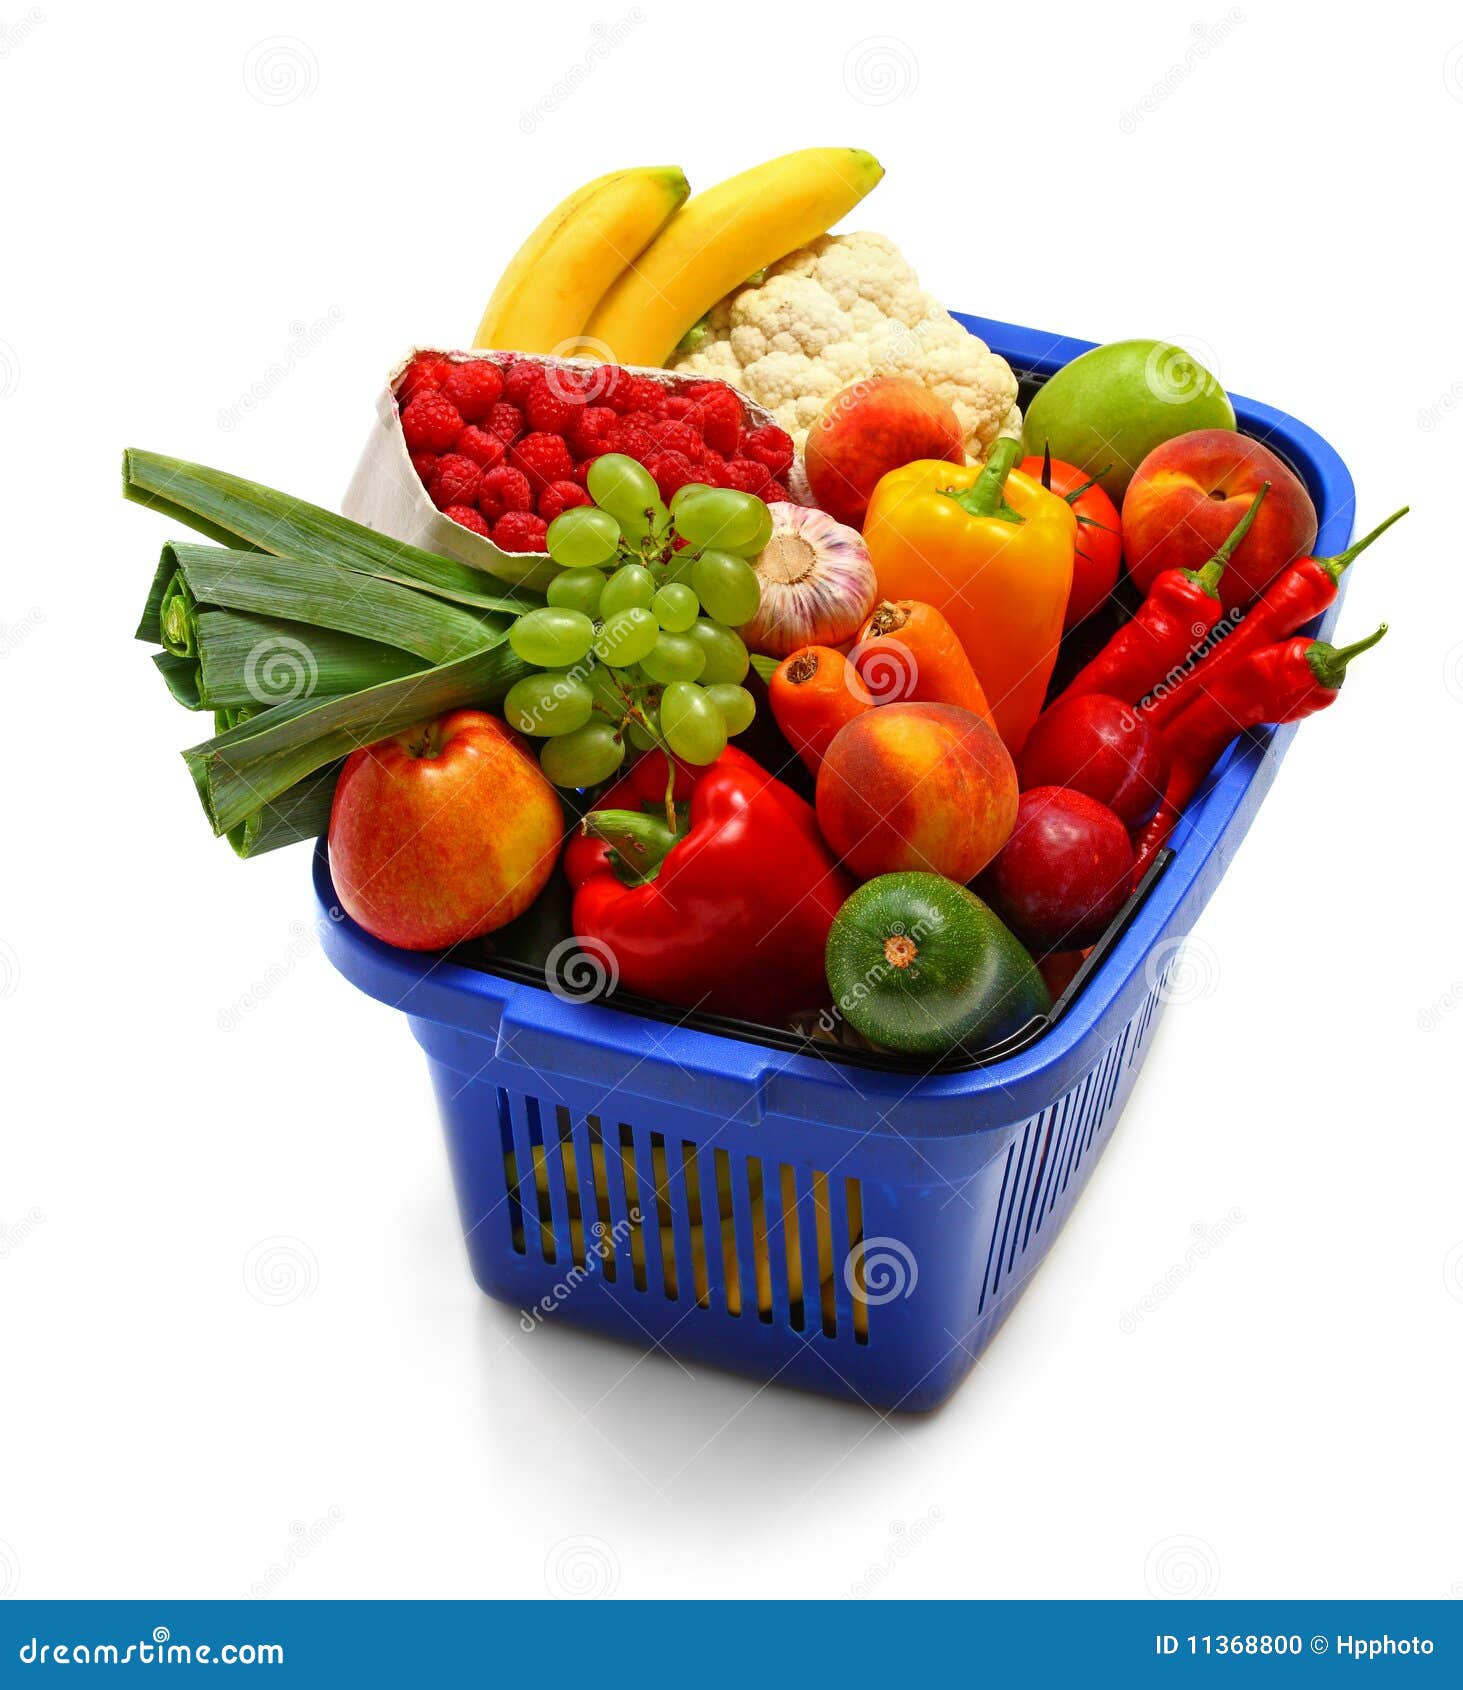 A Shopping Basket Full Of Fresh Produce Stock Photo Image Of Onions